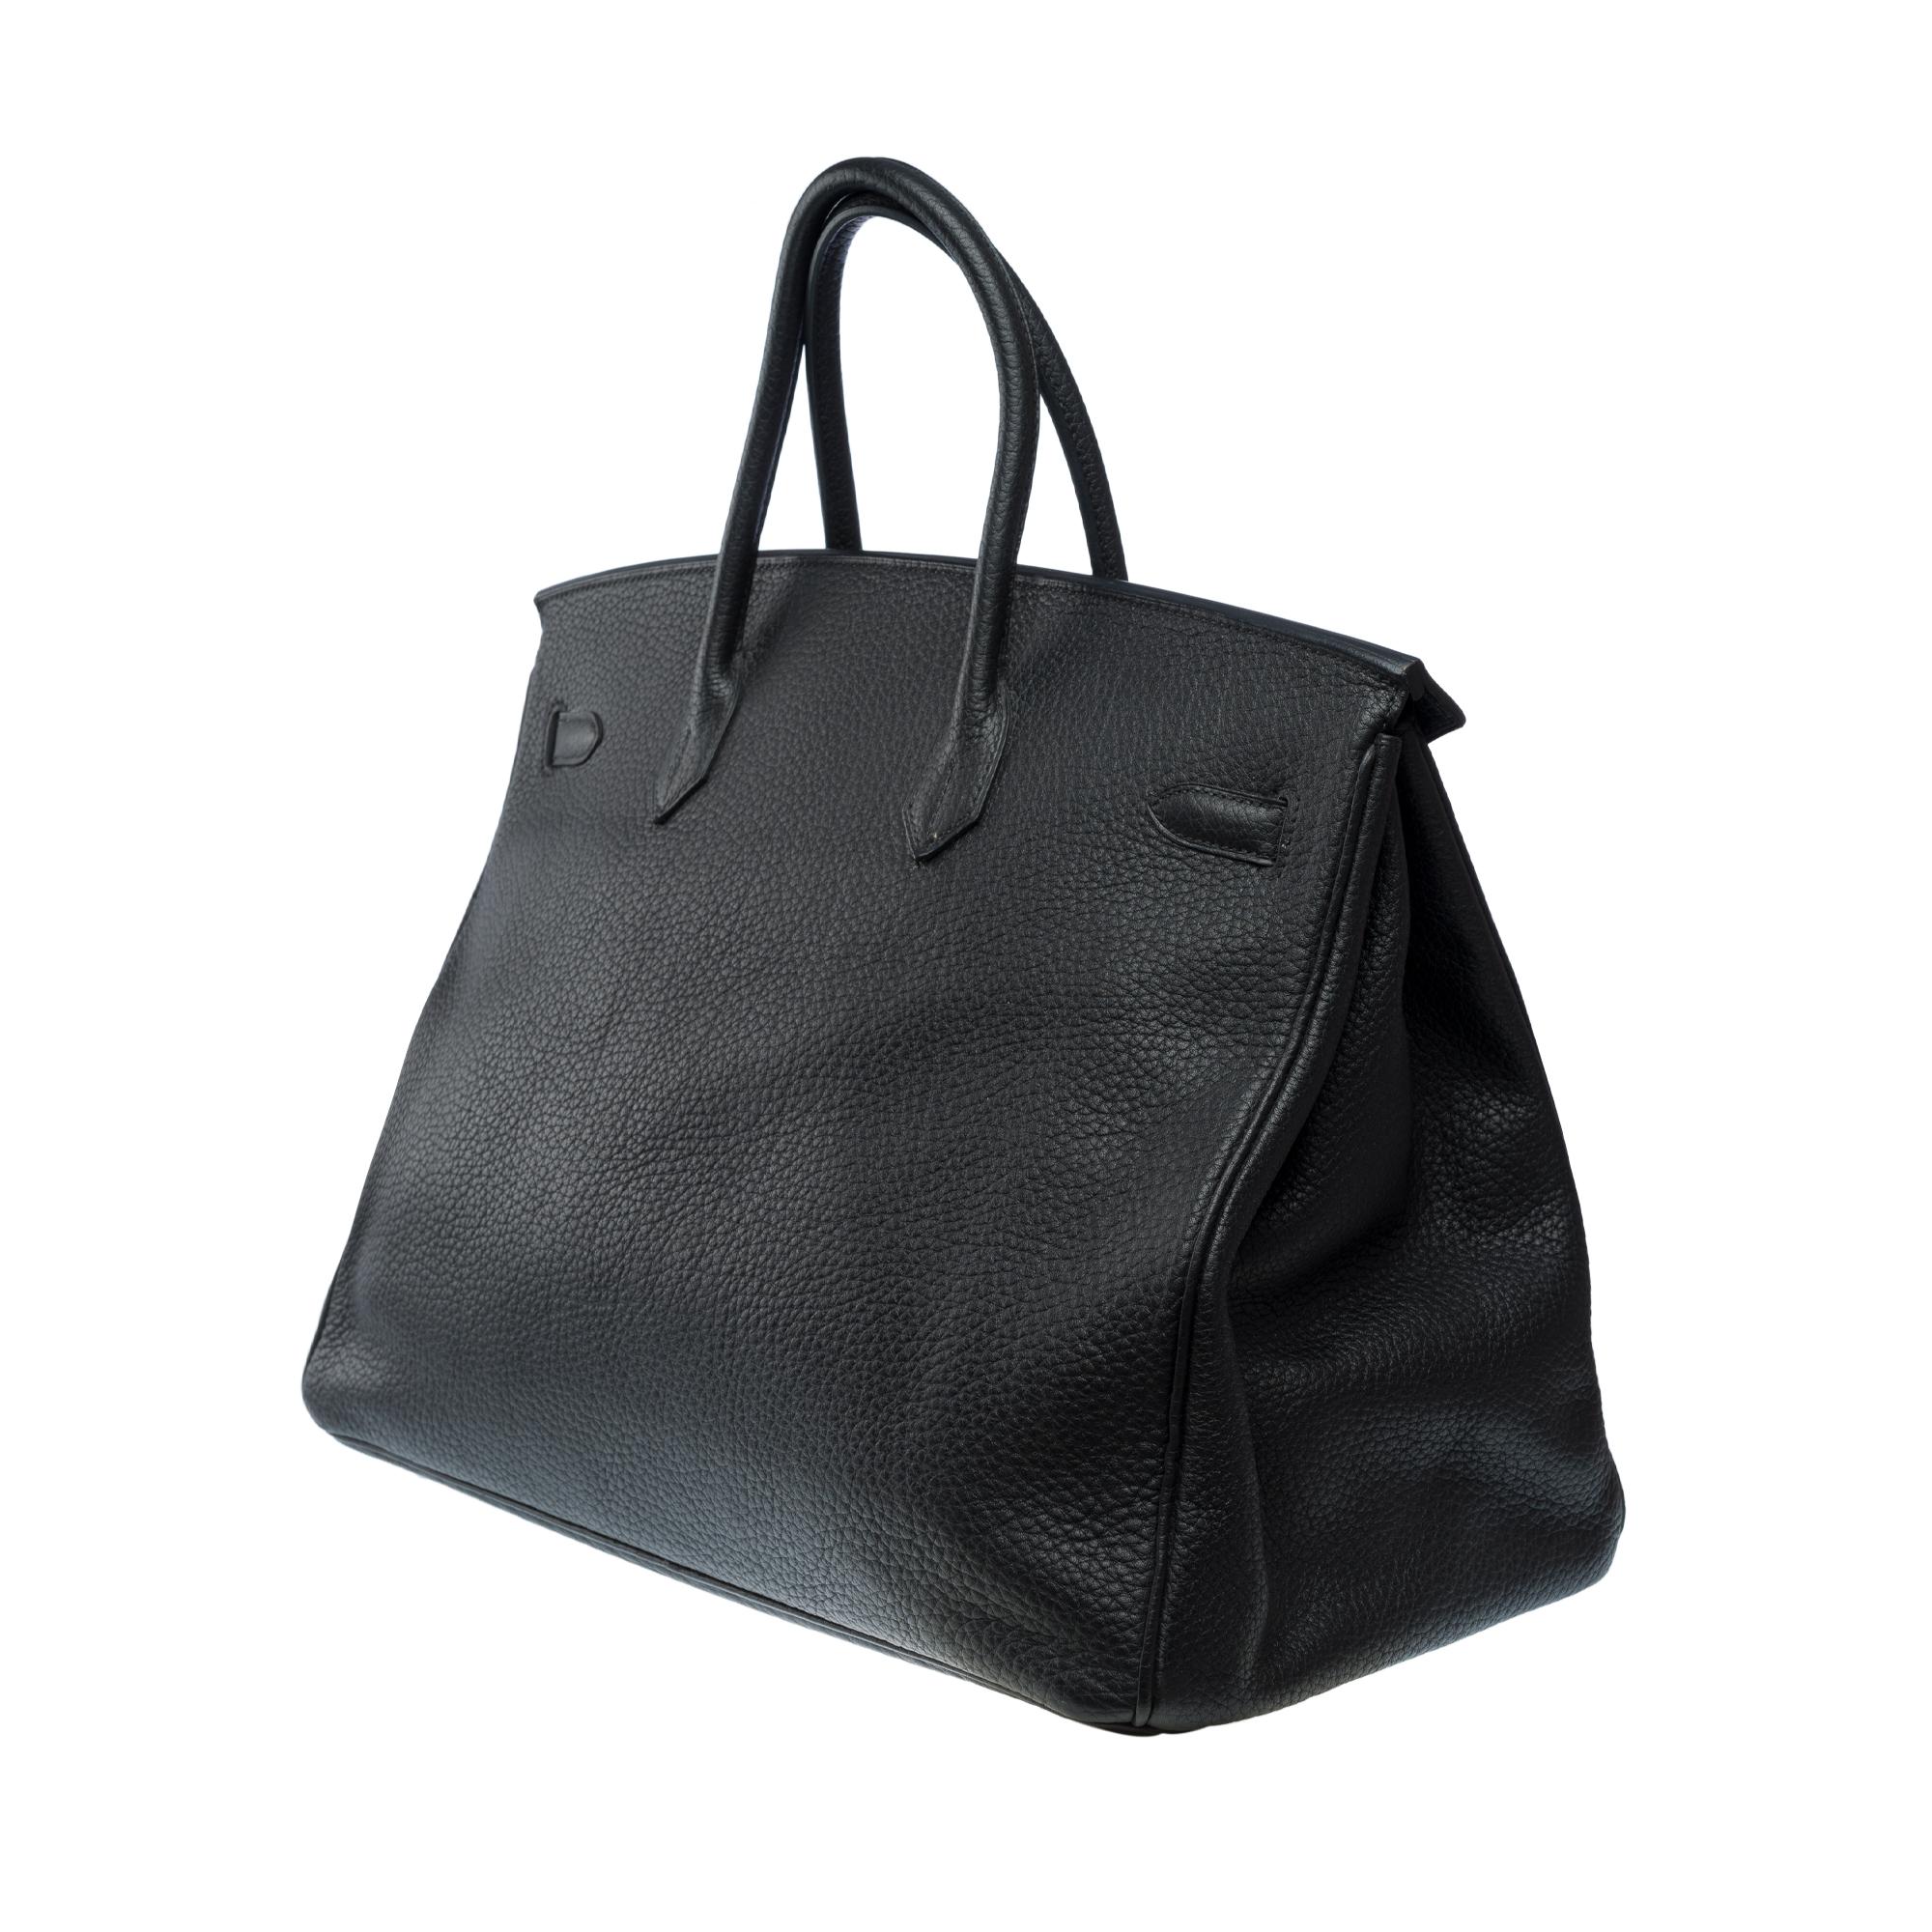 Classy Hermes Birkin 40cm handbag in Black Fjord calf leather, SHW For Sale 1